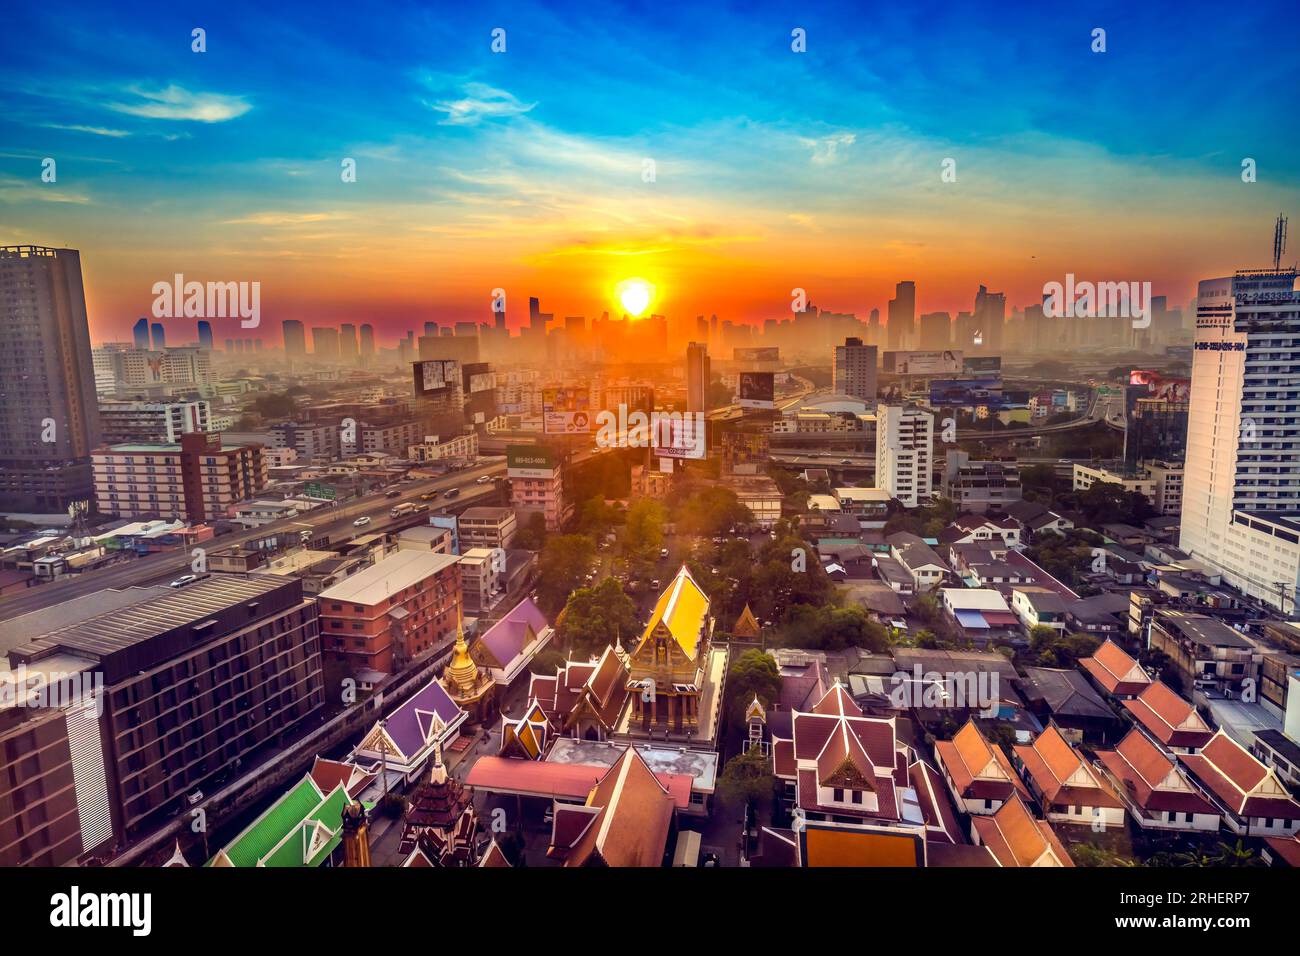 Colorful Sunrise Cityscape Wat That Sanarun Sunthikaram Temple Bangkok Thailand. Stock Photo